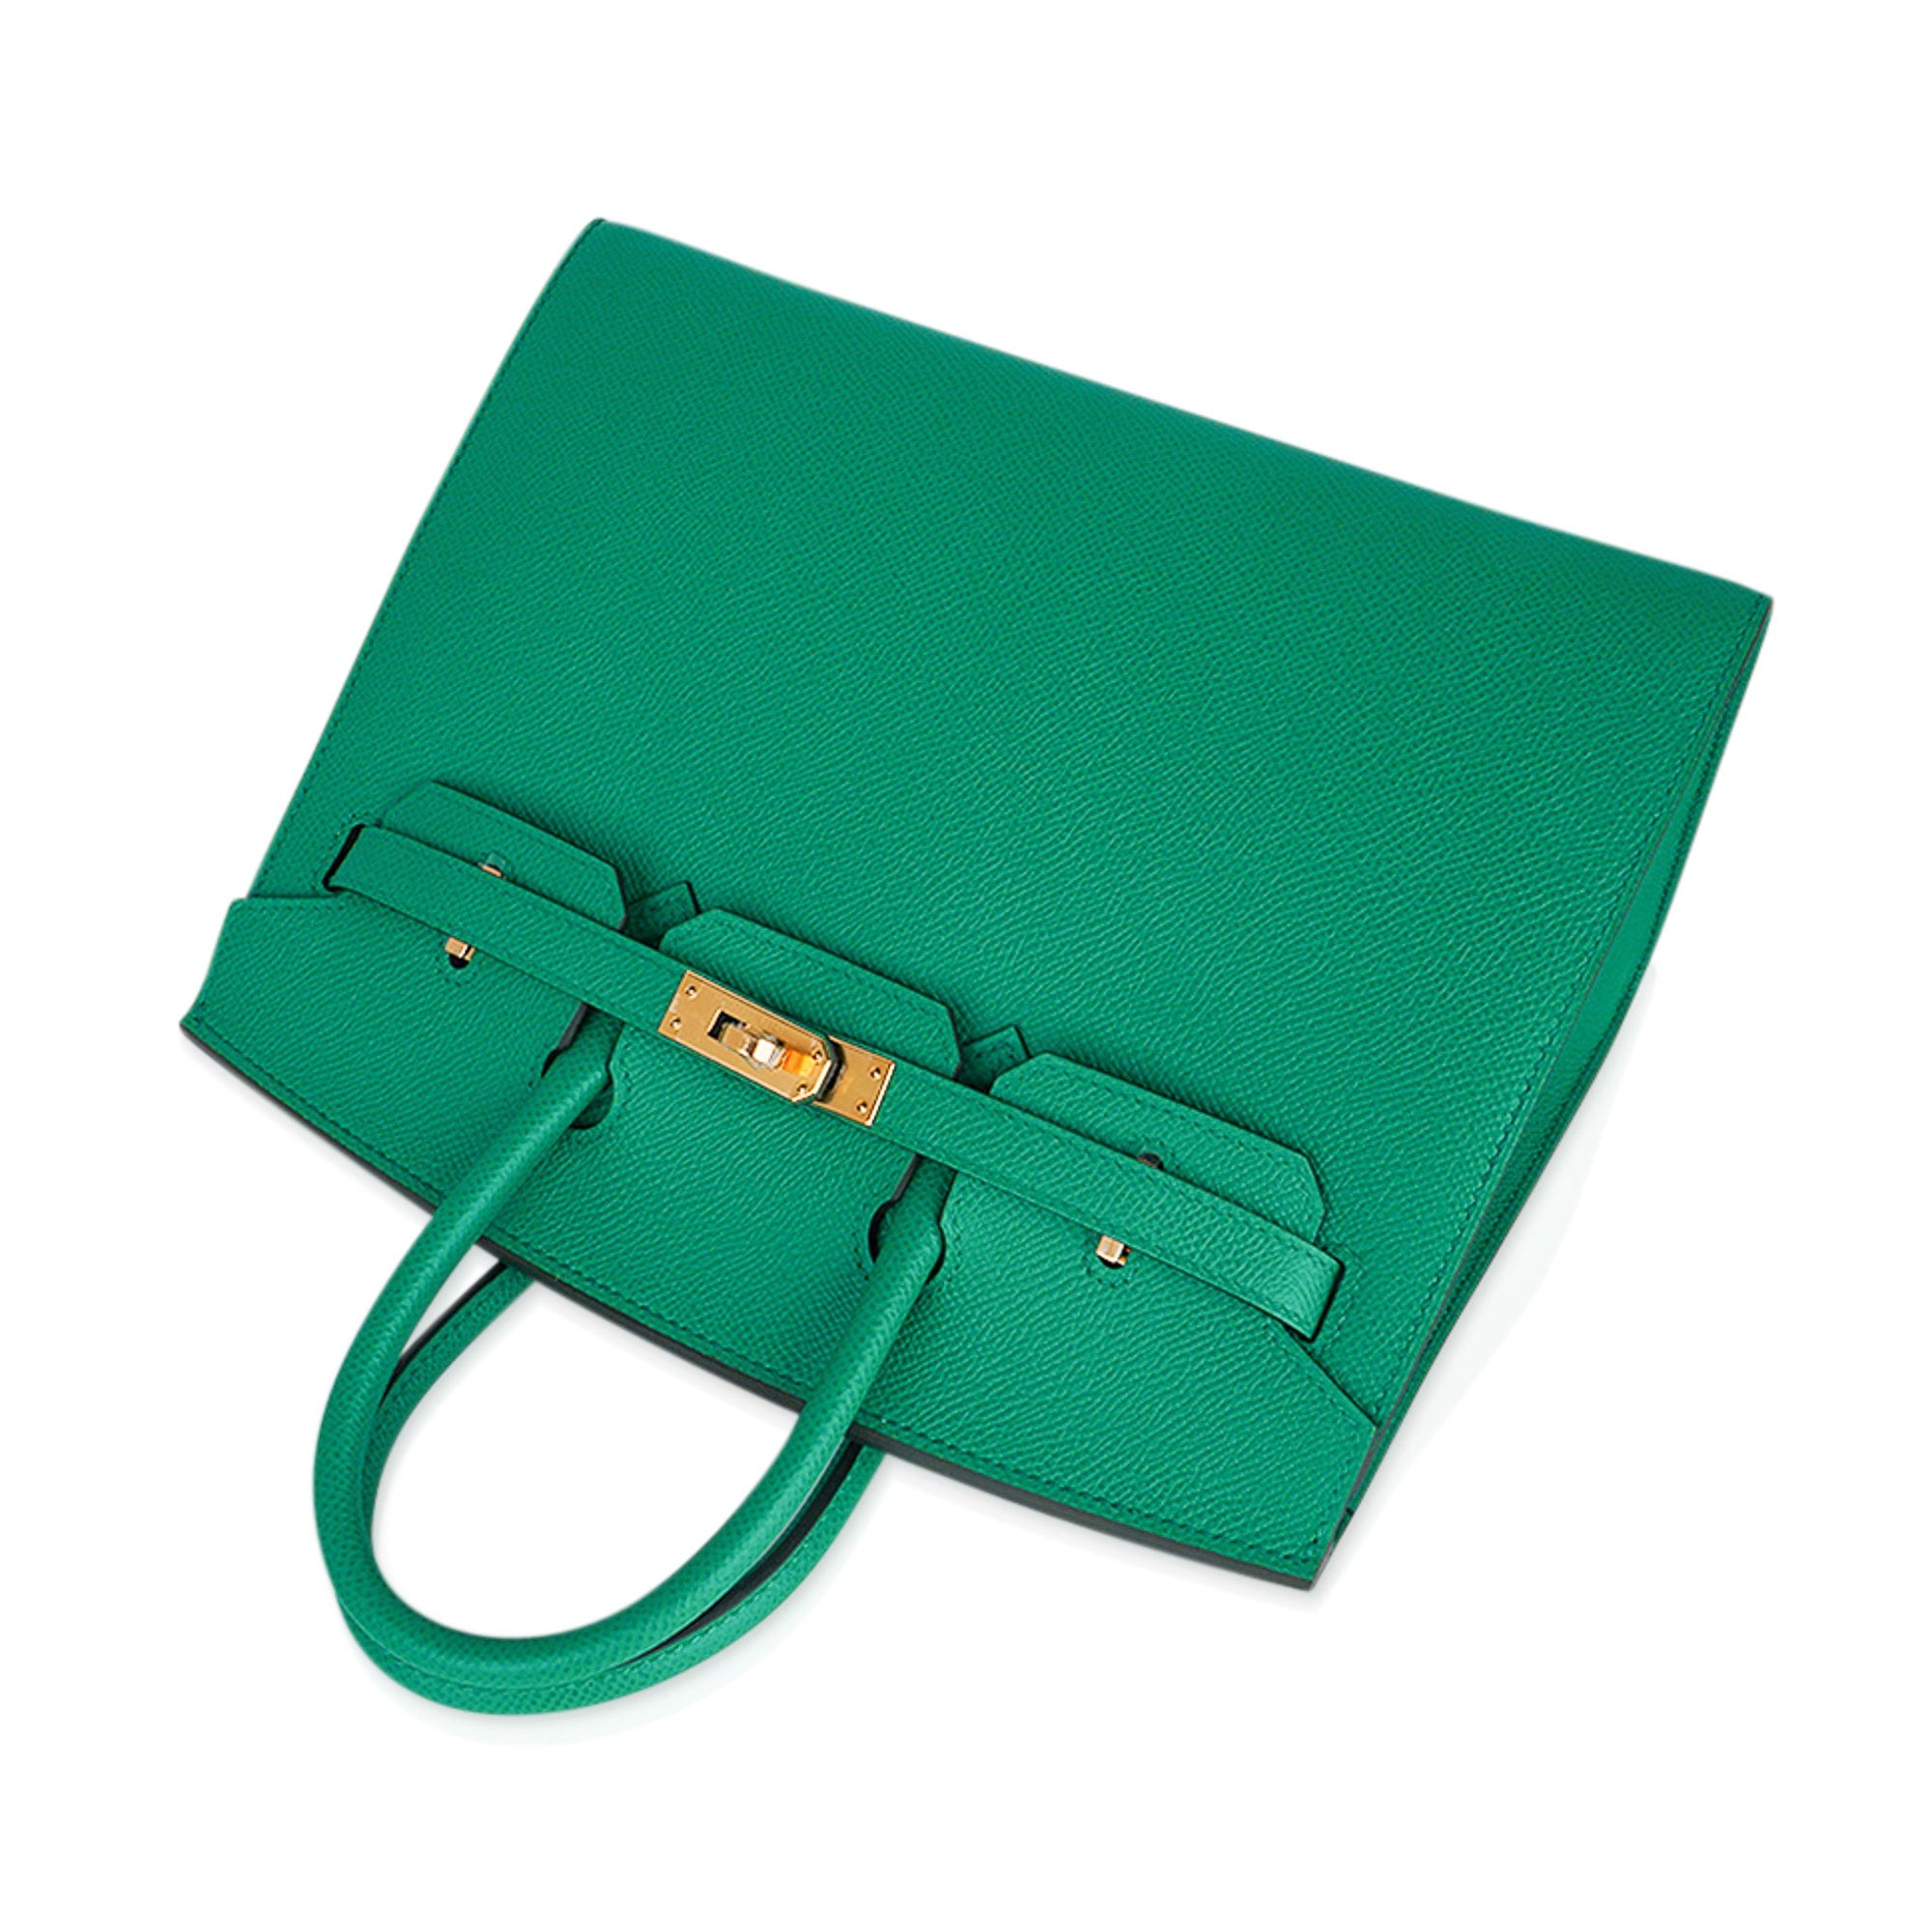 Hermes Birkin 25 Bag Sellier Vert Jade Epsom Leather with Gold Hardware